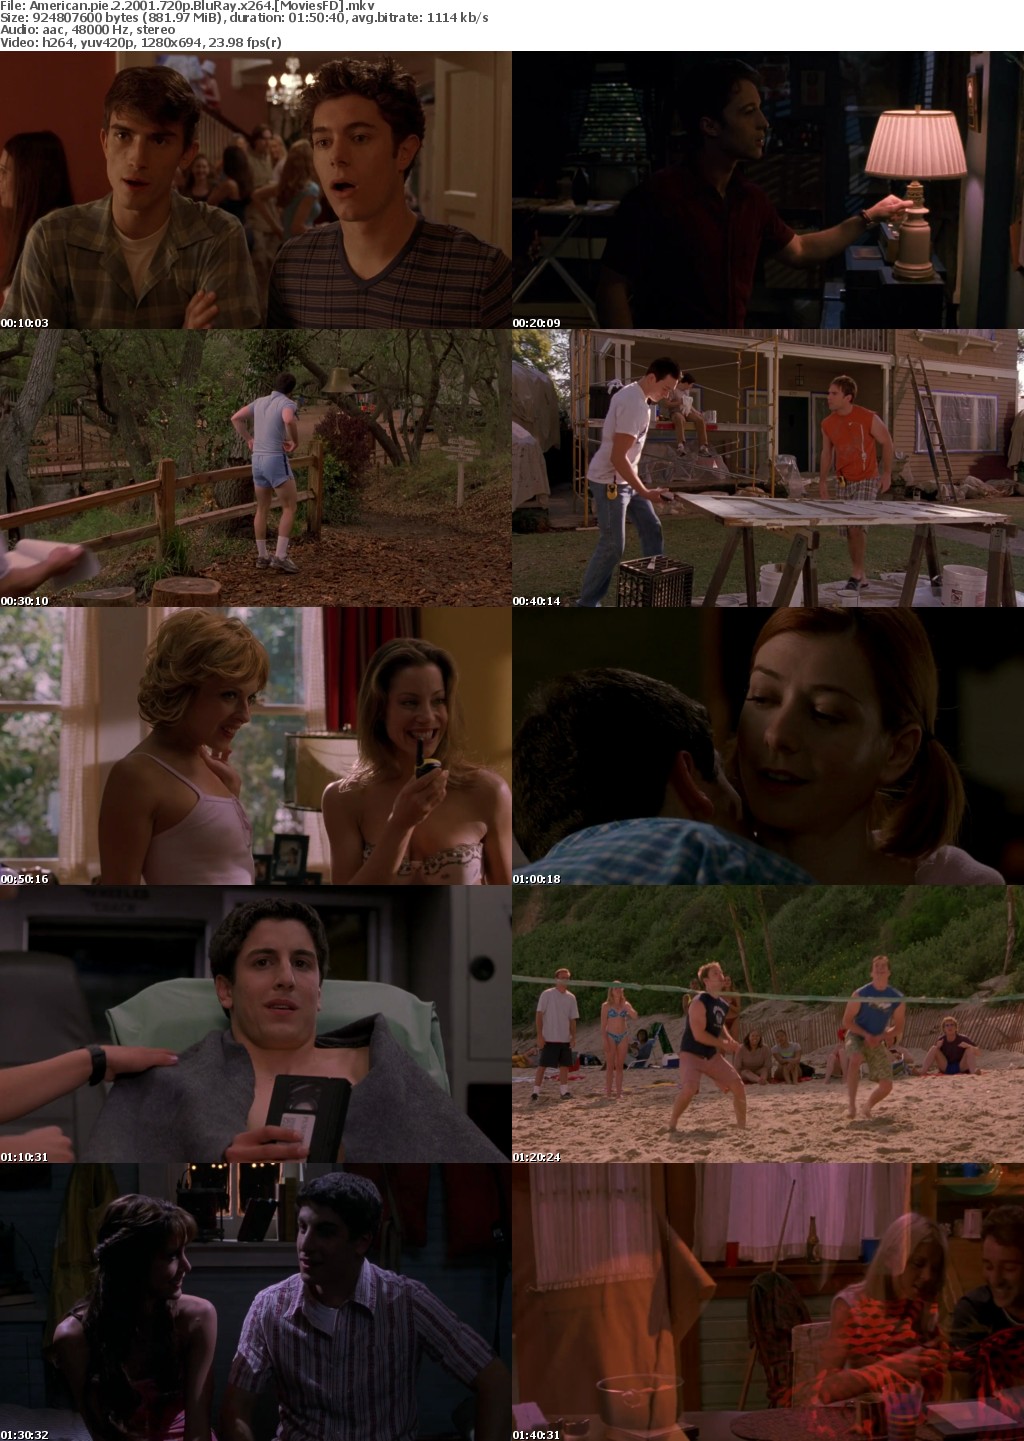 American Pie 2 (2001) 720P Bluray X264 Moviesfd